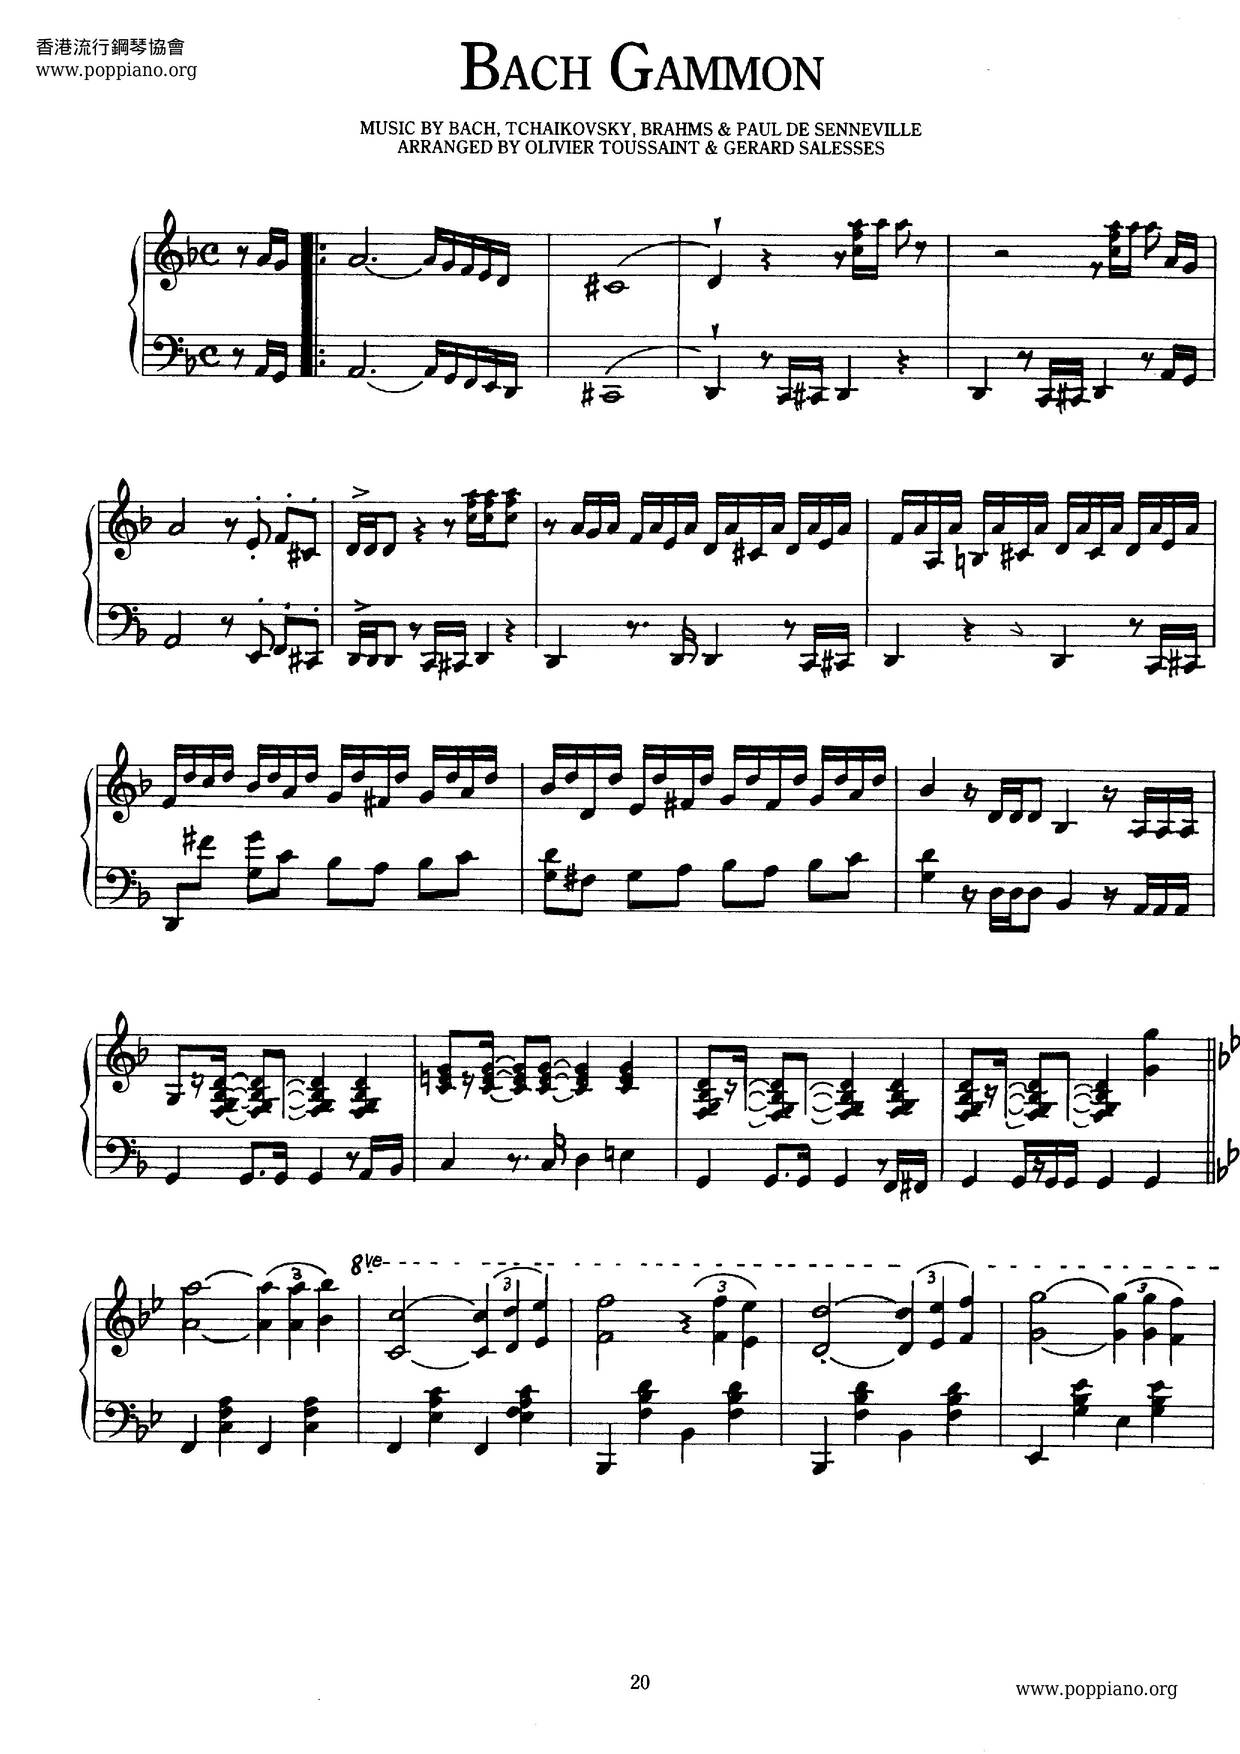 Bach Gammon Score